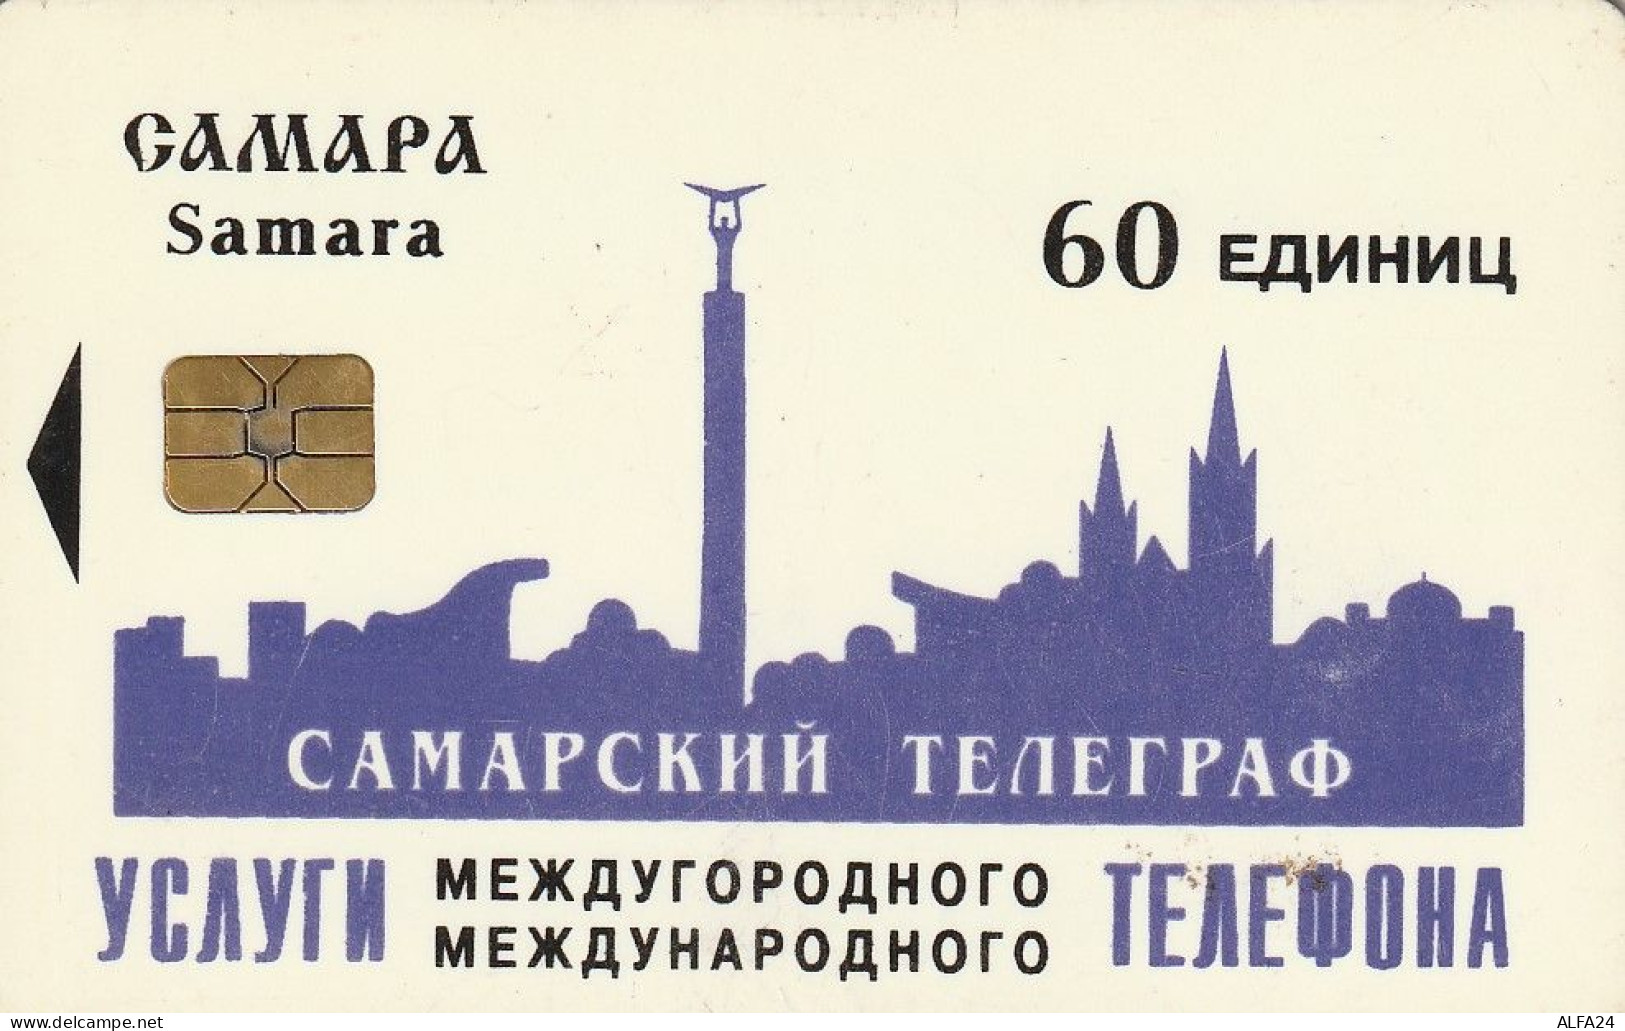 PHONE CARD RUSSIA Samara (E9.5.5 - Russland